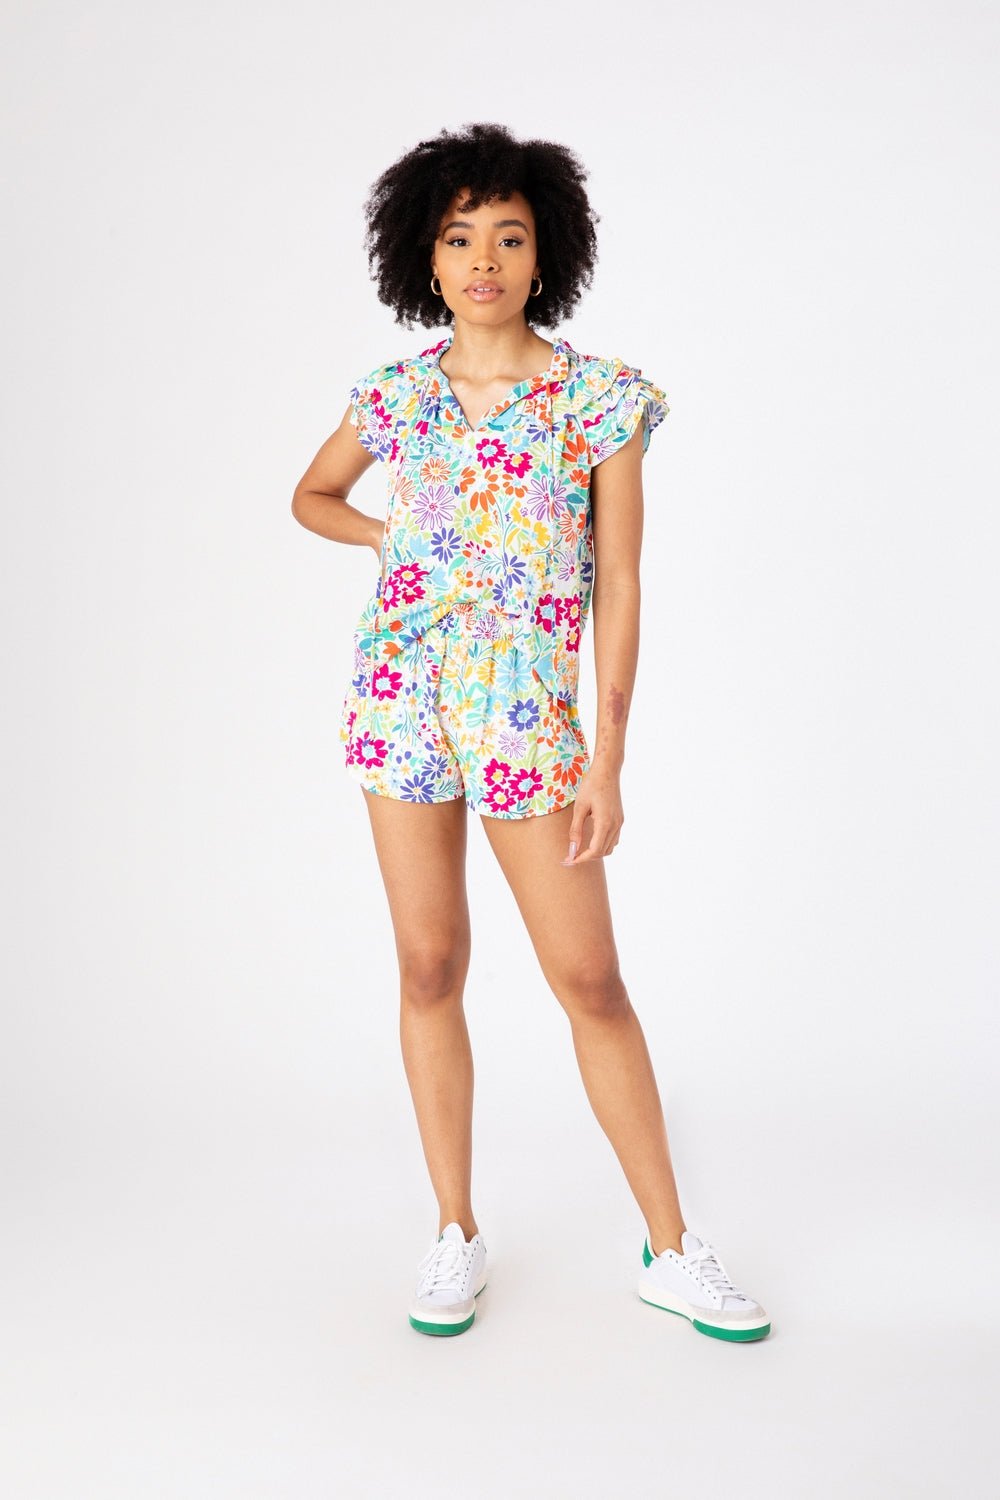 Floral Jasmine Top - DressbarnShirts & Blouses